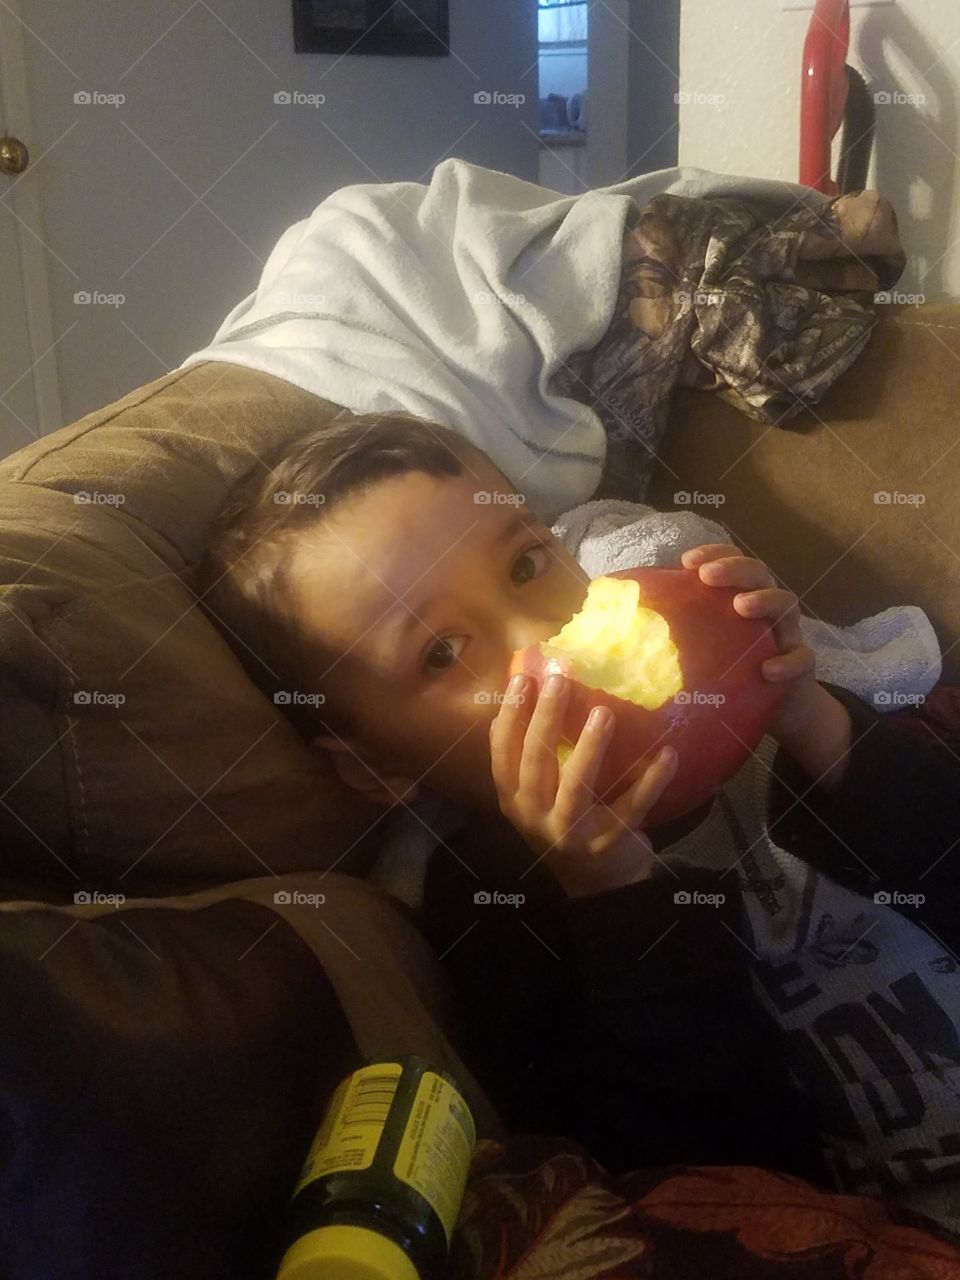 Enjoying an Apple.